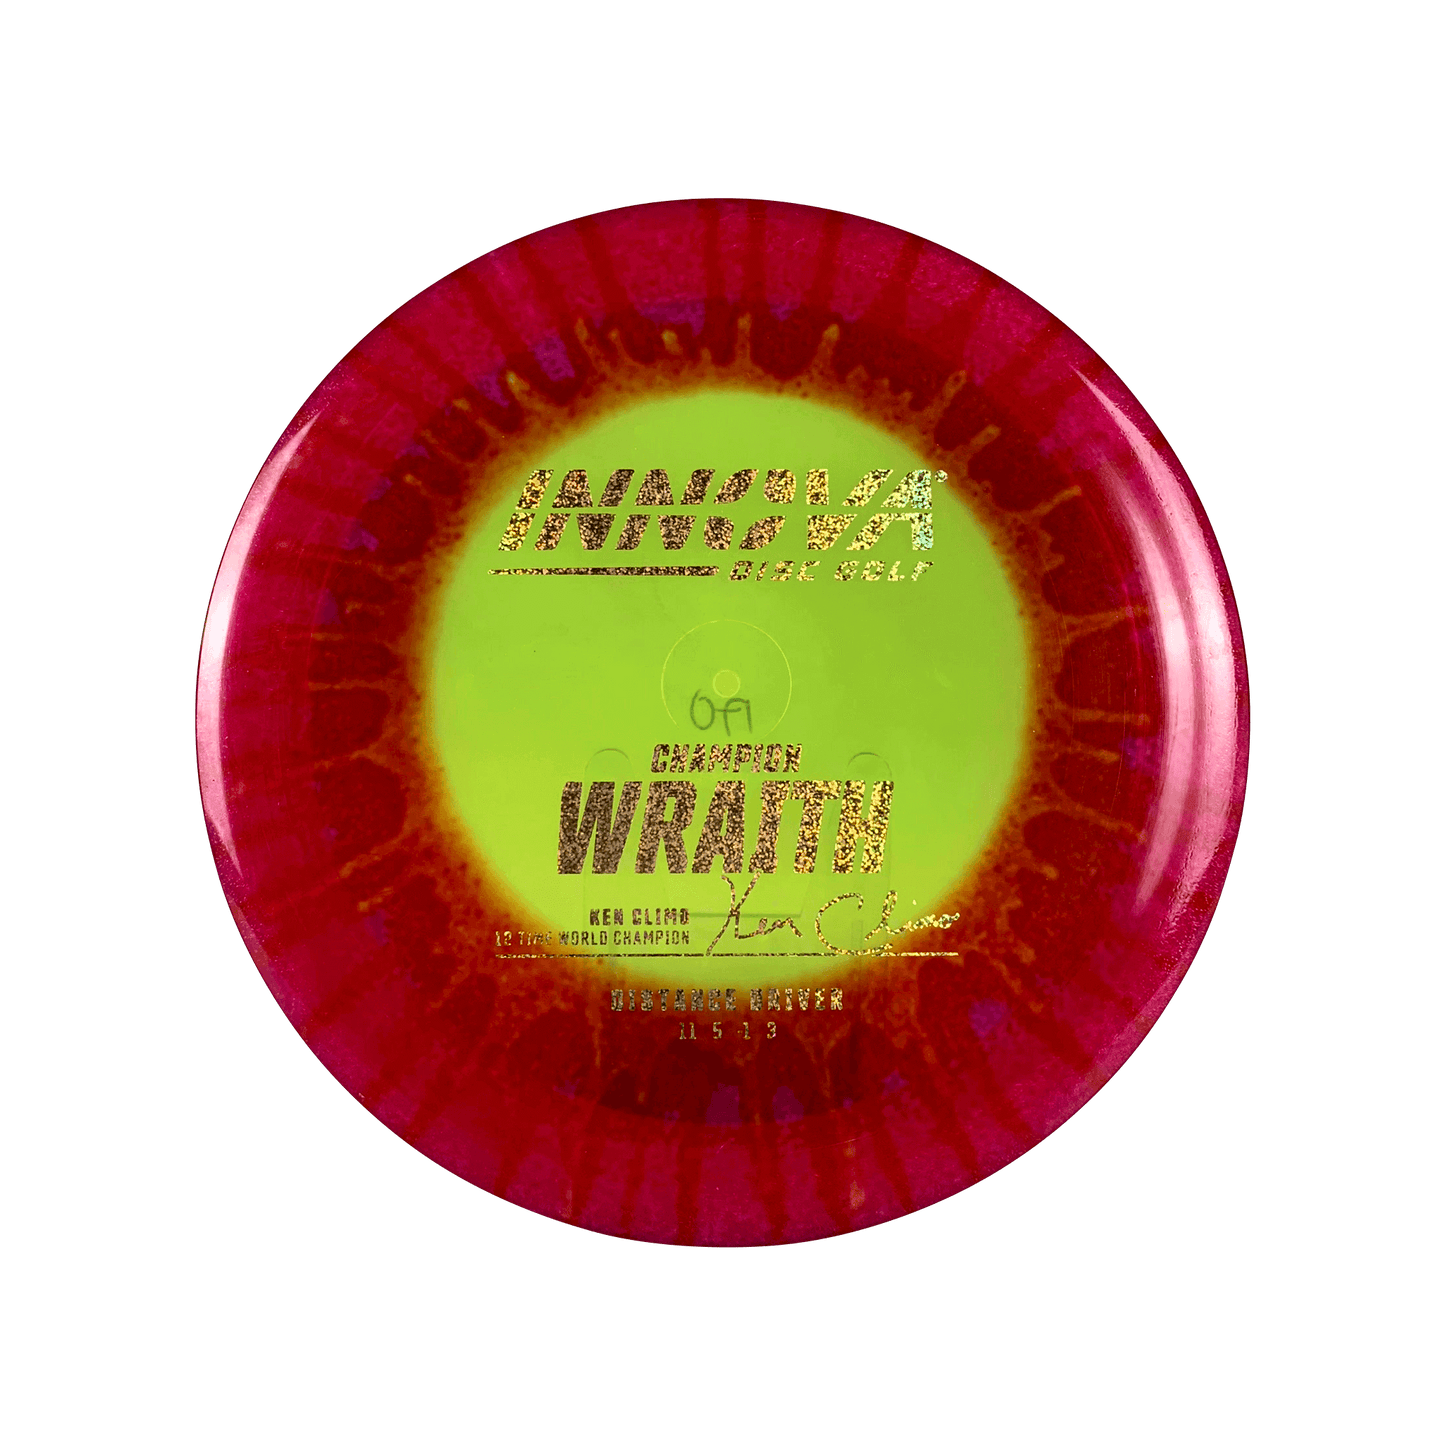 Champion Wraith - Ken Climo Disc Innova I-DYE assorted colors 173 